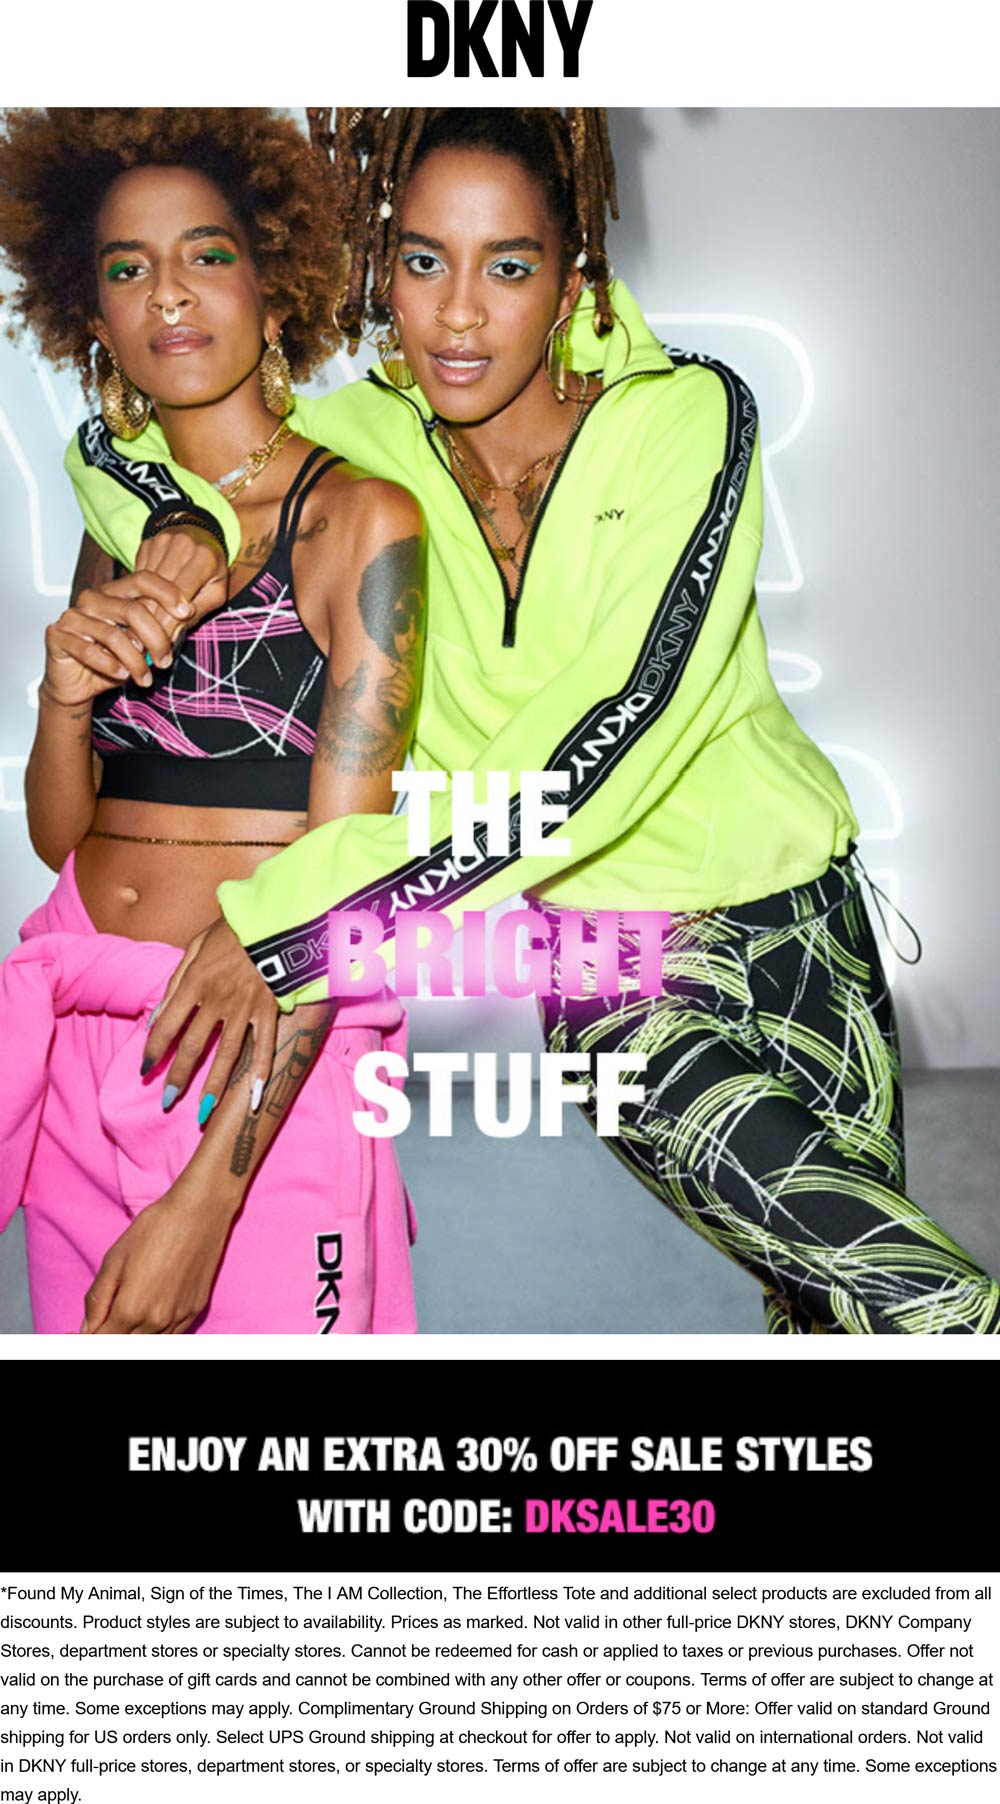 DKNY stores Coupon  Extra 30% off sale styles at DKNY via promo code DKSALE30 #dkny 